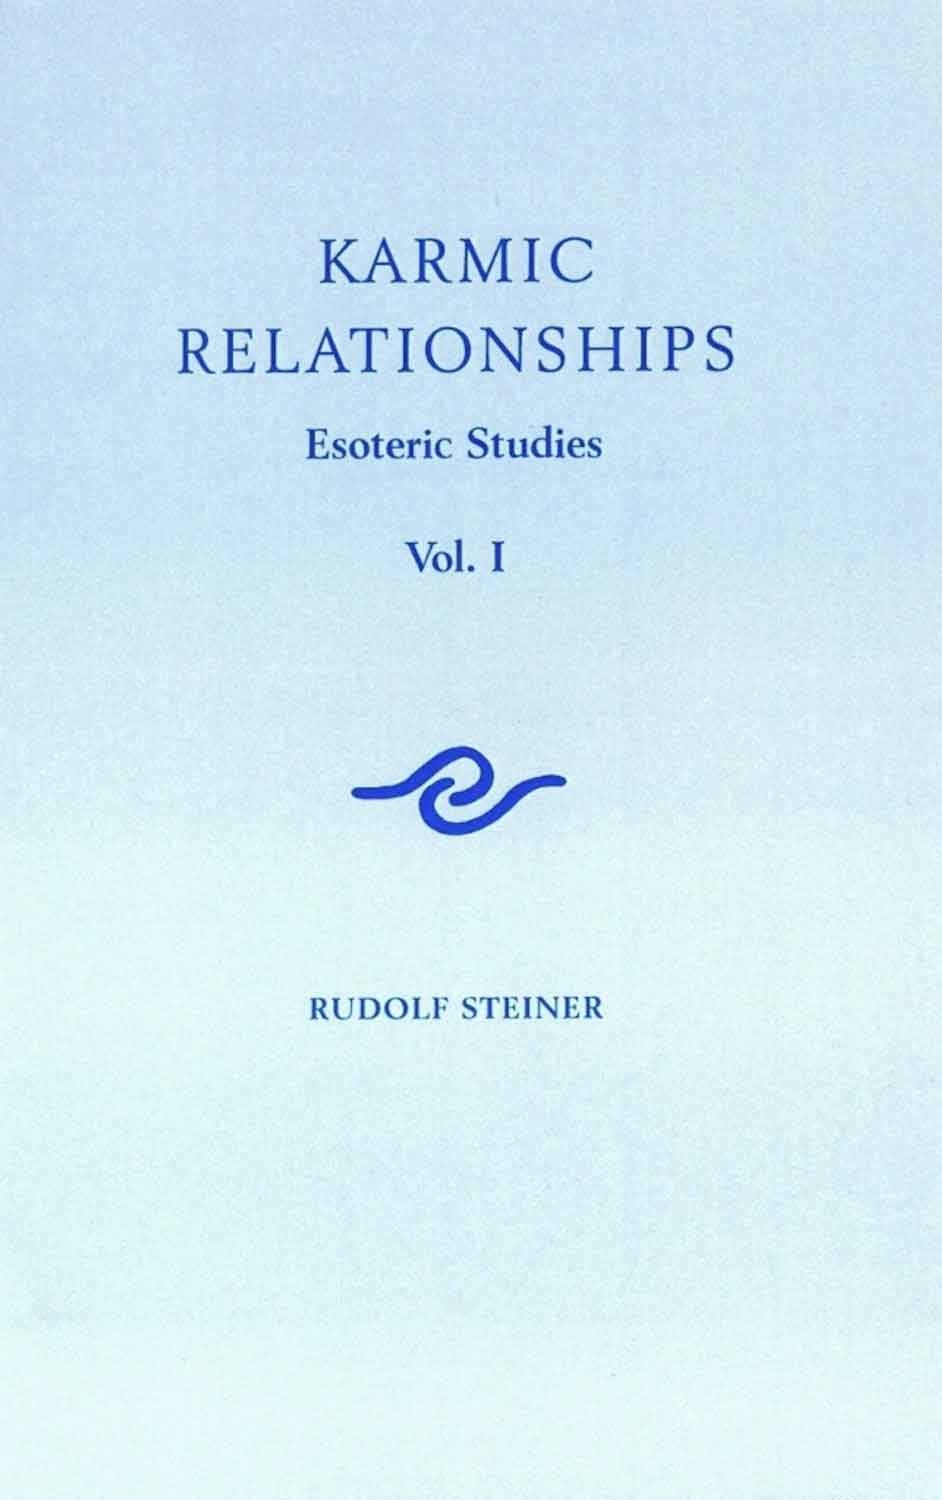 Episode 24: Lecture 24: Karmic Relationships given on April 23 1924 by Rudolf Steiner